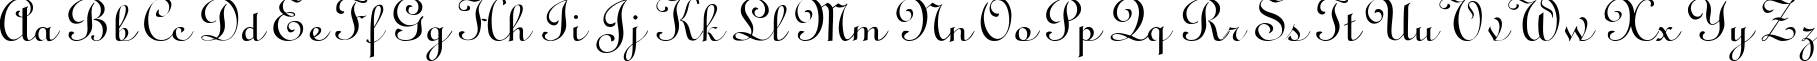 Пример написания английского алфавита шрифтом LirussTYGRA